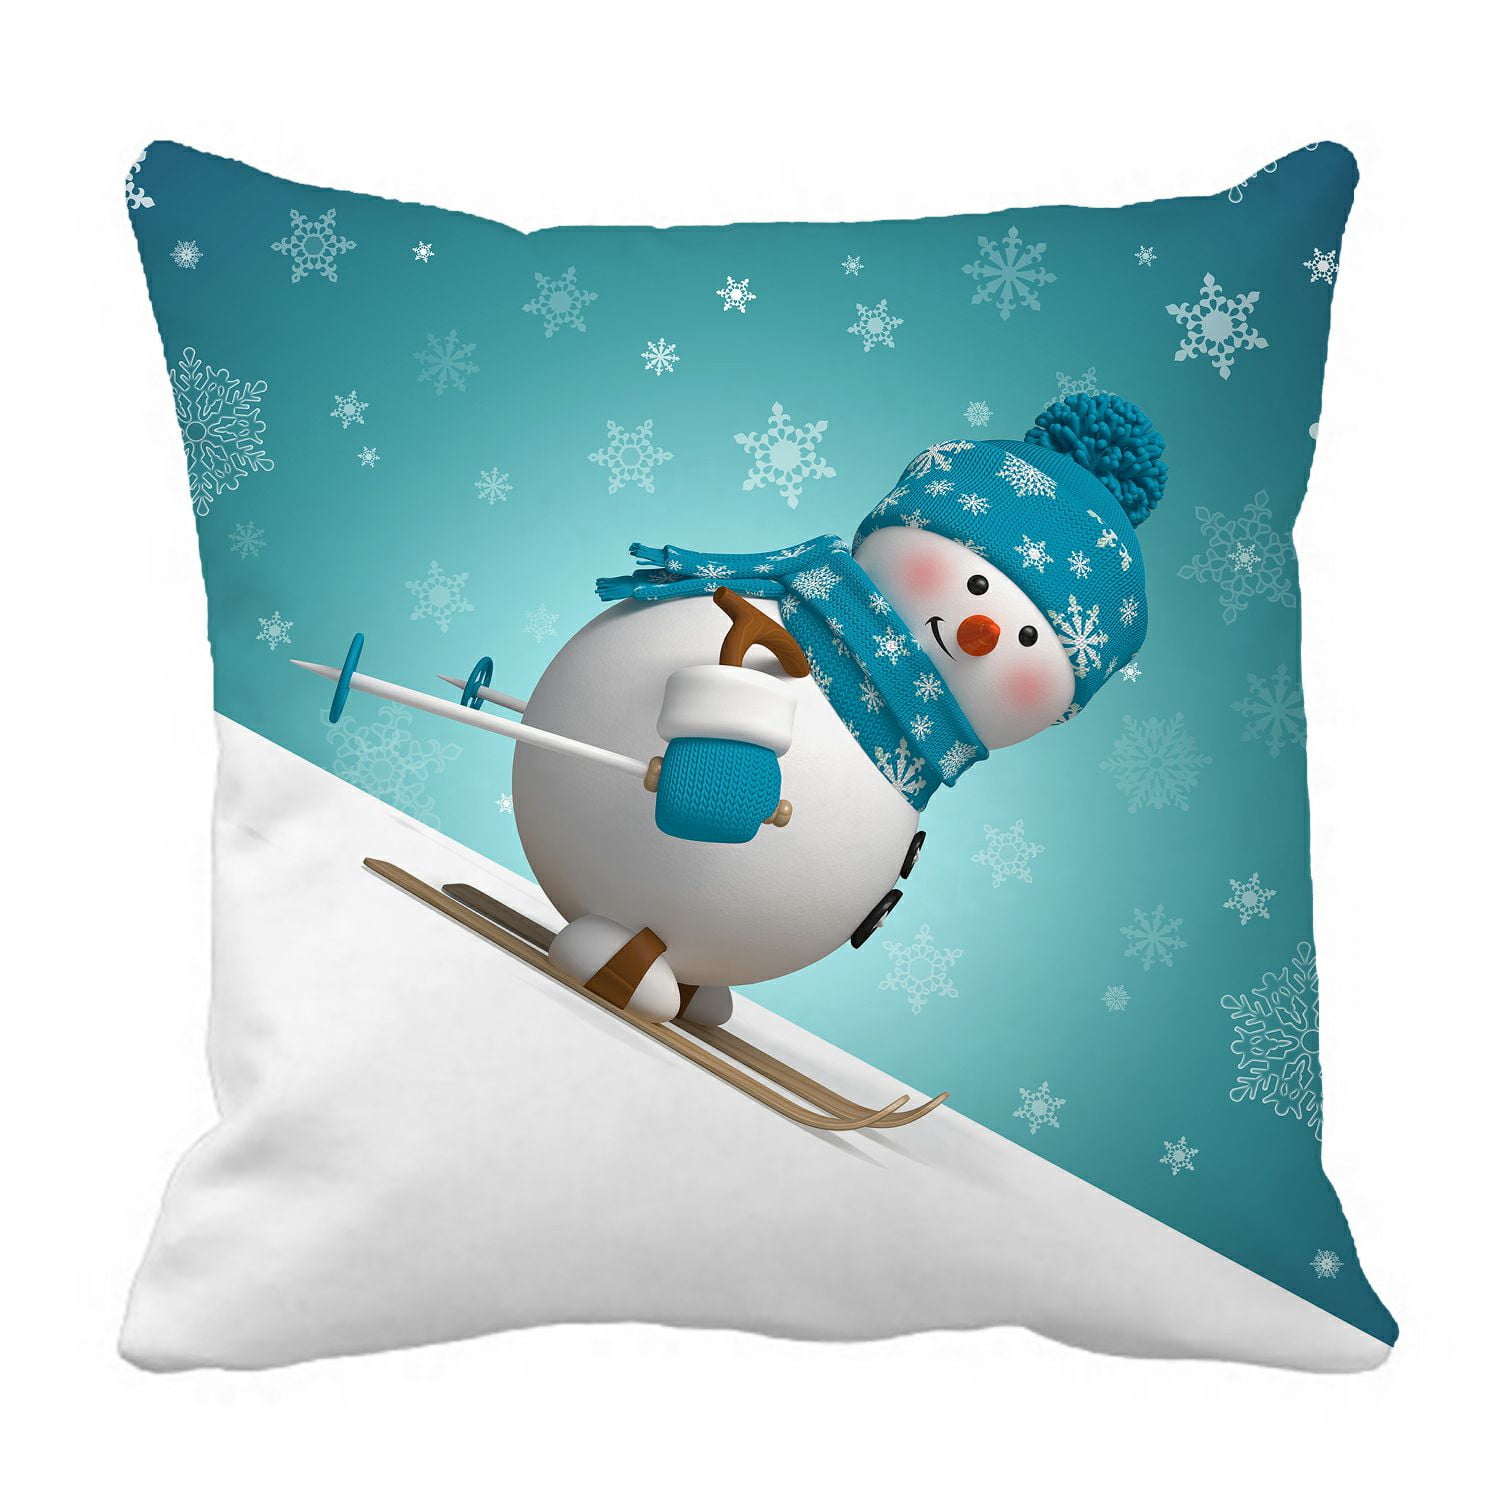 ZKGK Winter Snowman Pillowcase Home Decor Pillow Cover Case Cushion Two ...